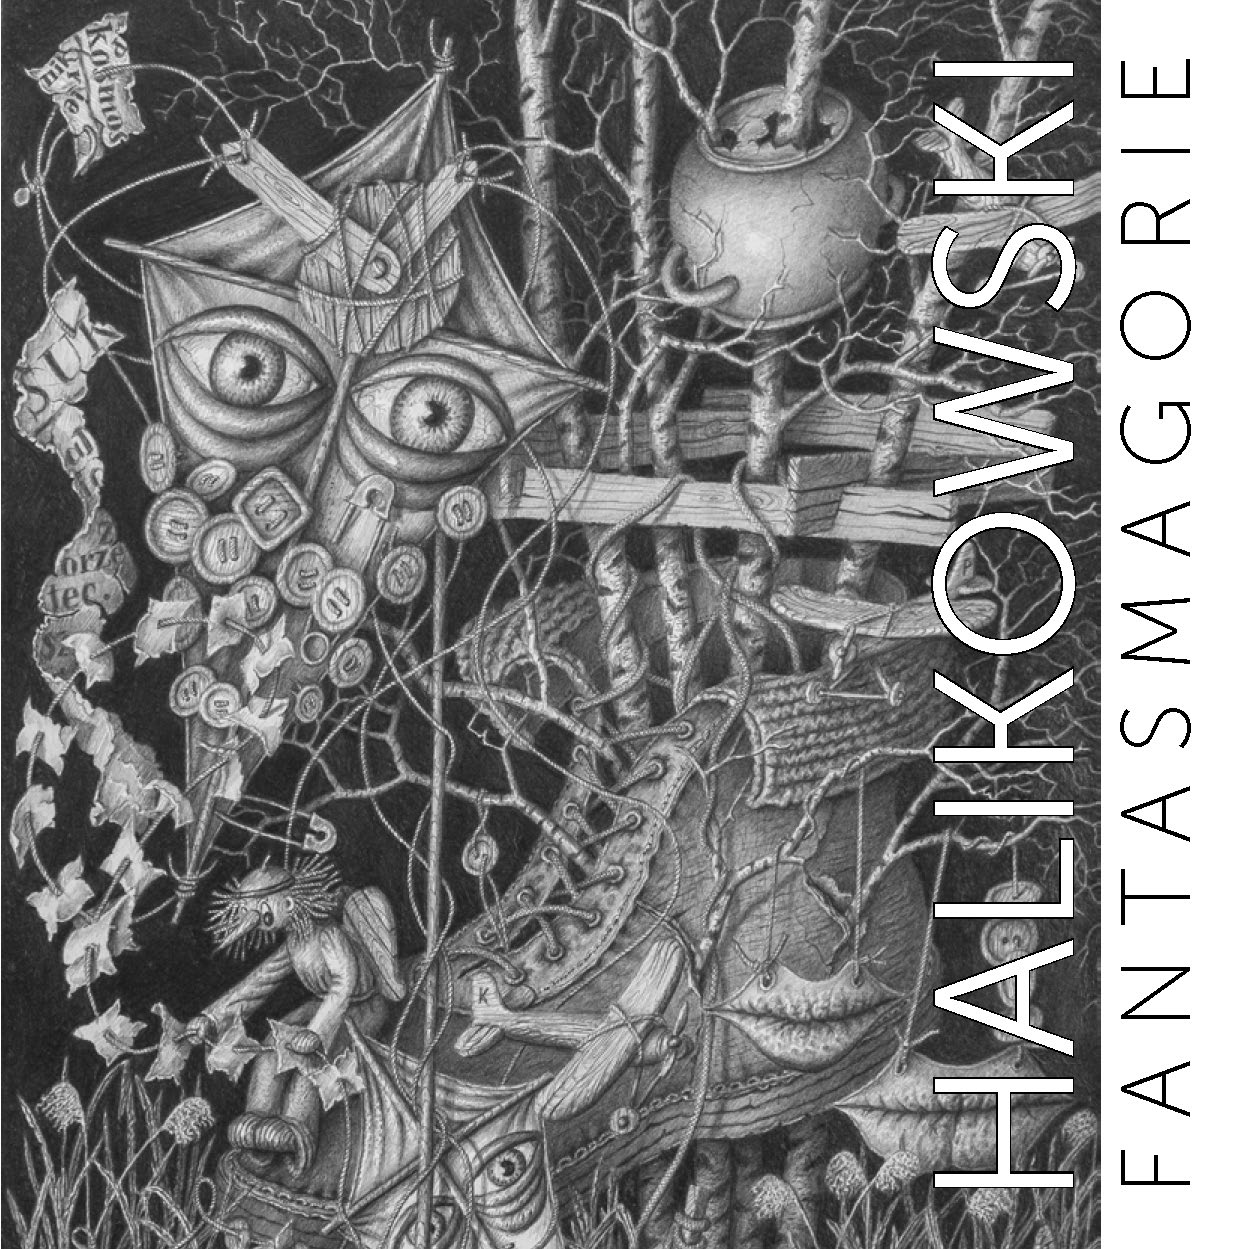 2019-03 wystawa Fantasmagorie Halikowski - katalog okładka 1